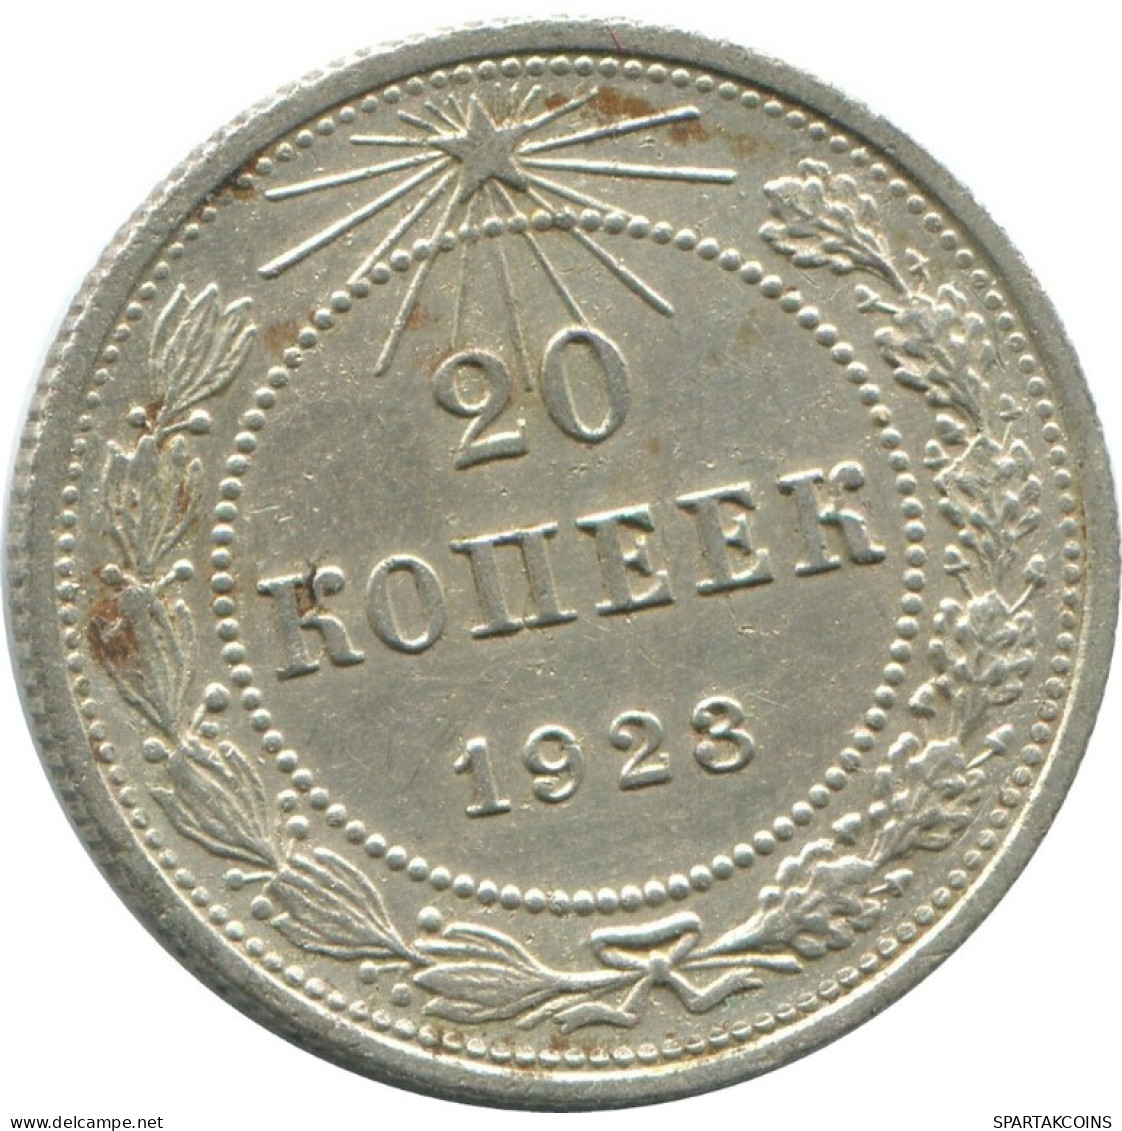 20 KOPEKS 1923 RUSSIA RSFSR SILVER Coin HIGH GRADE #AF698.U.A - Russia